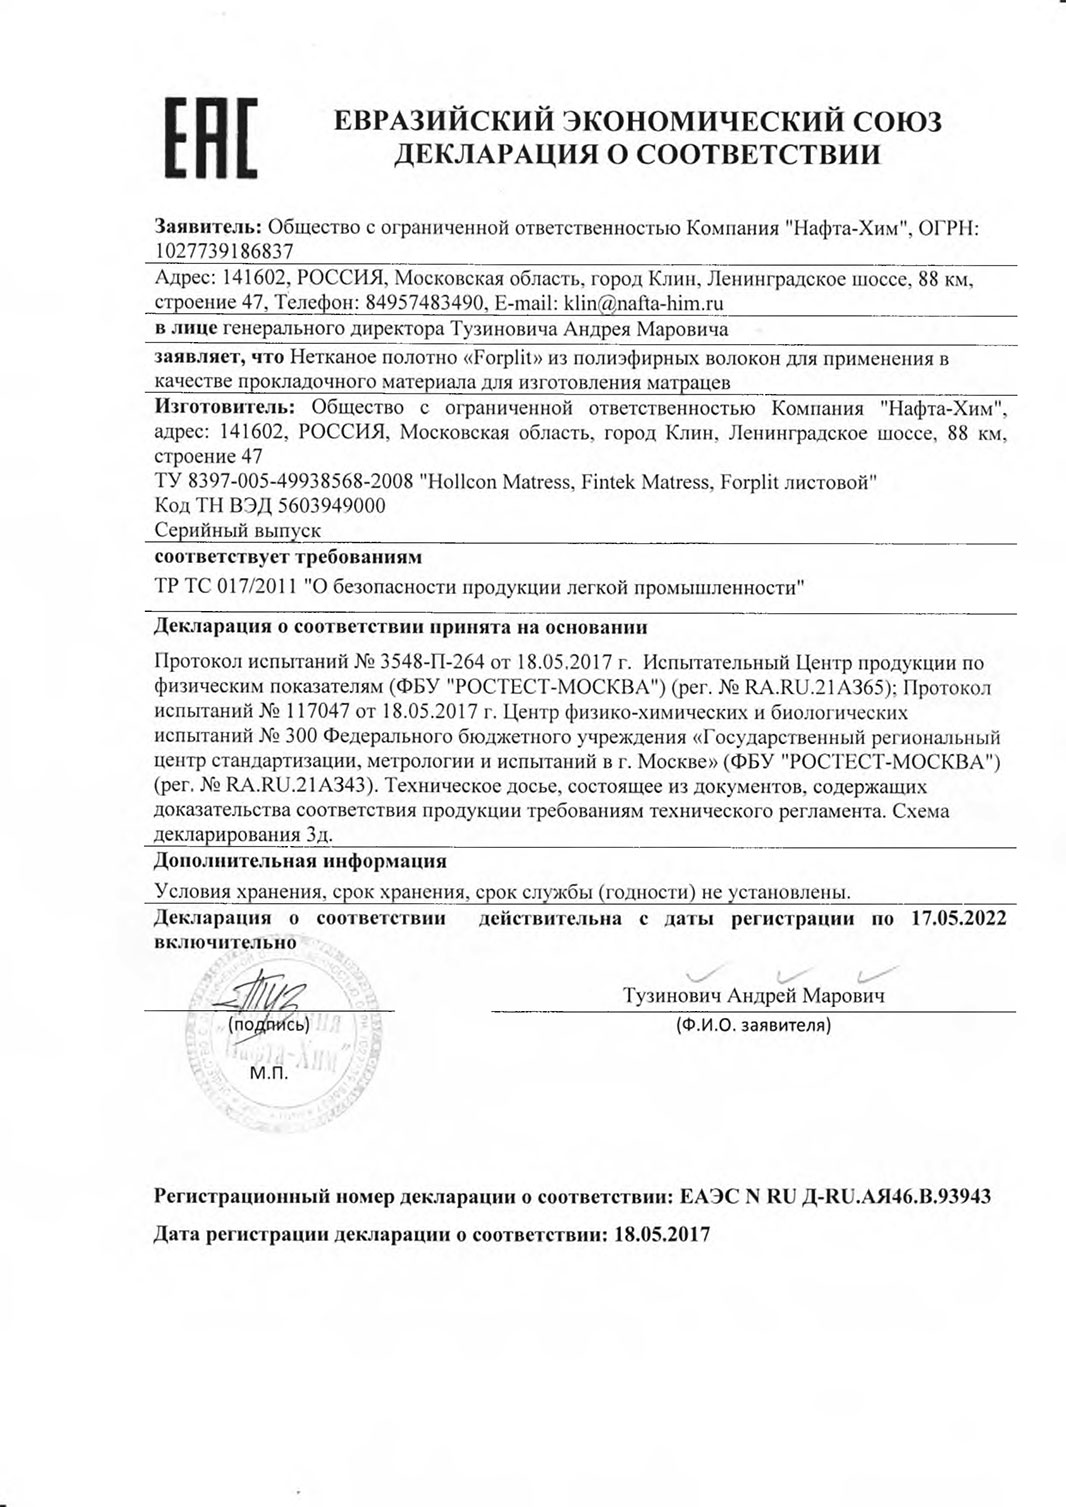 Сертификаты на продукцию ТМ PromtexOrient